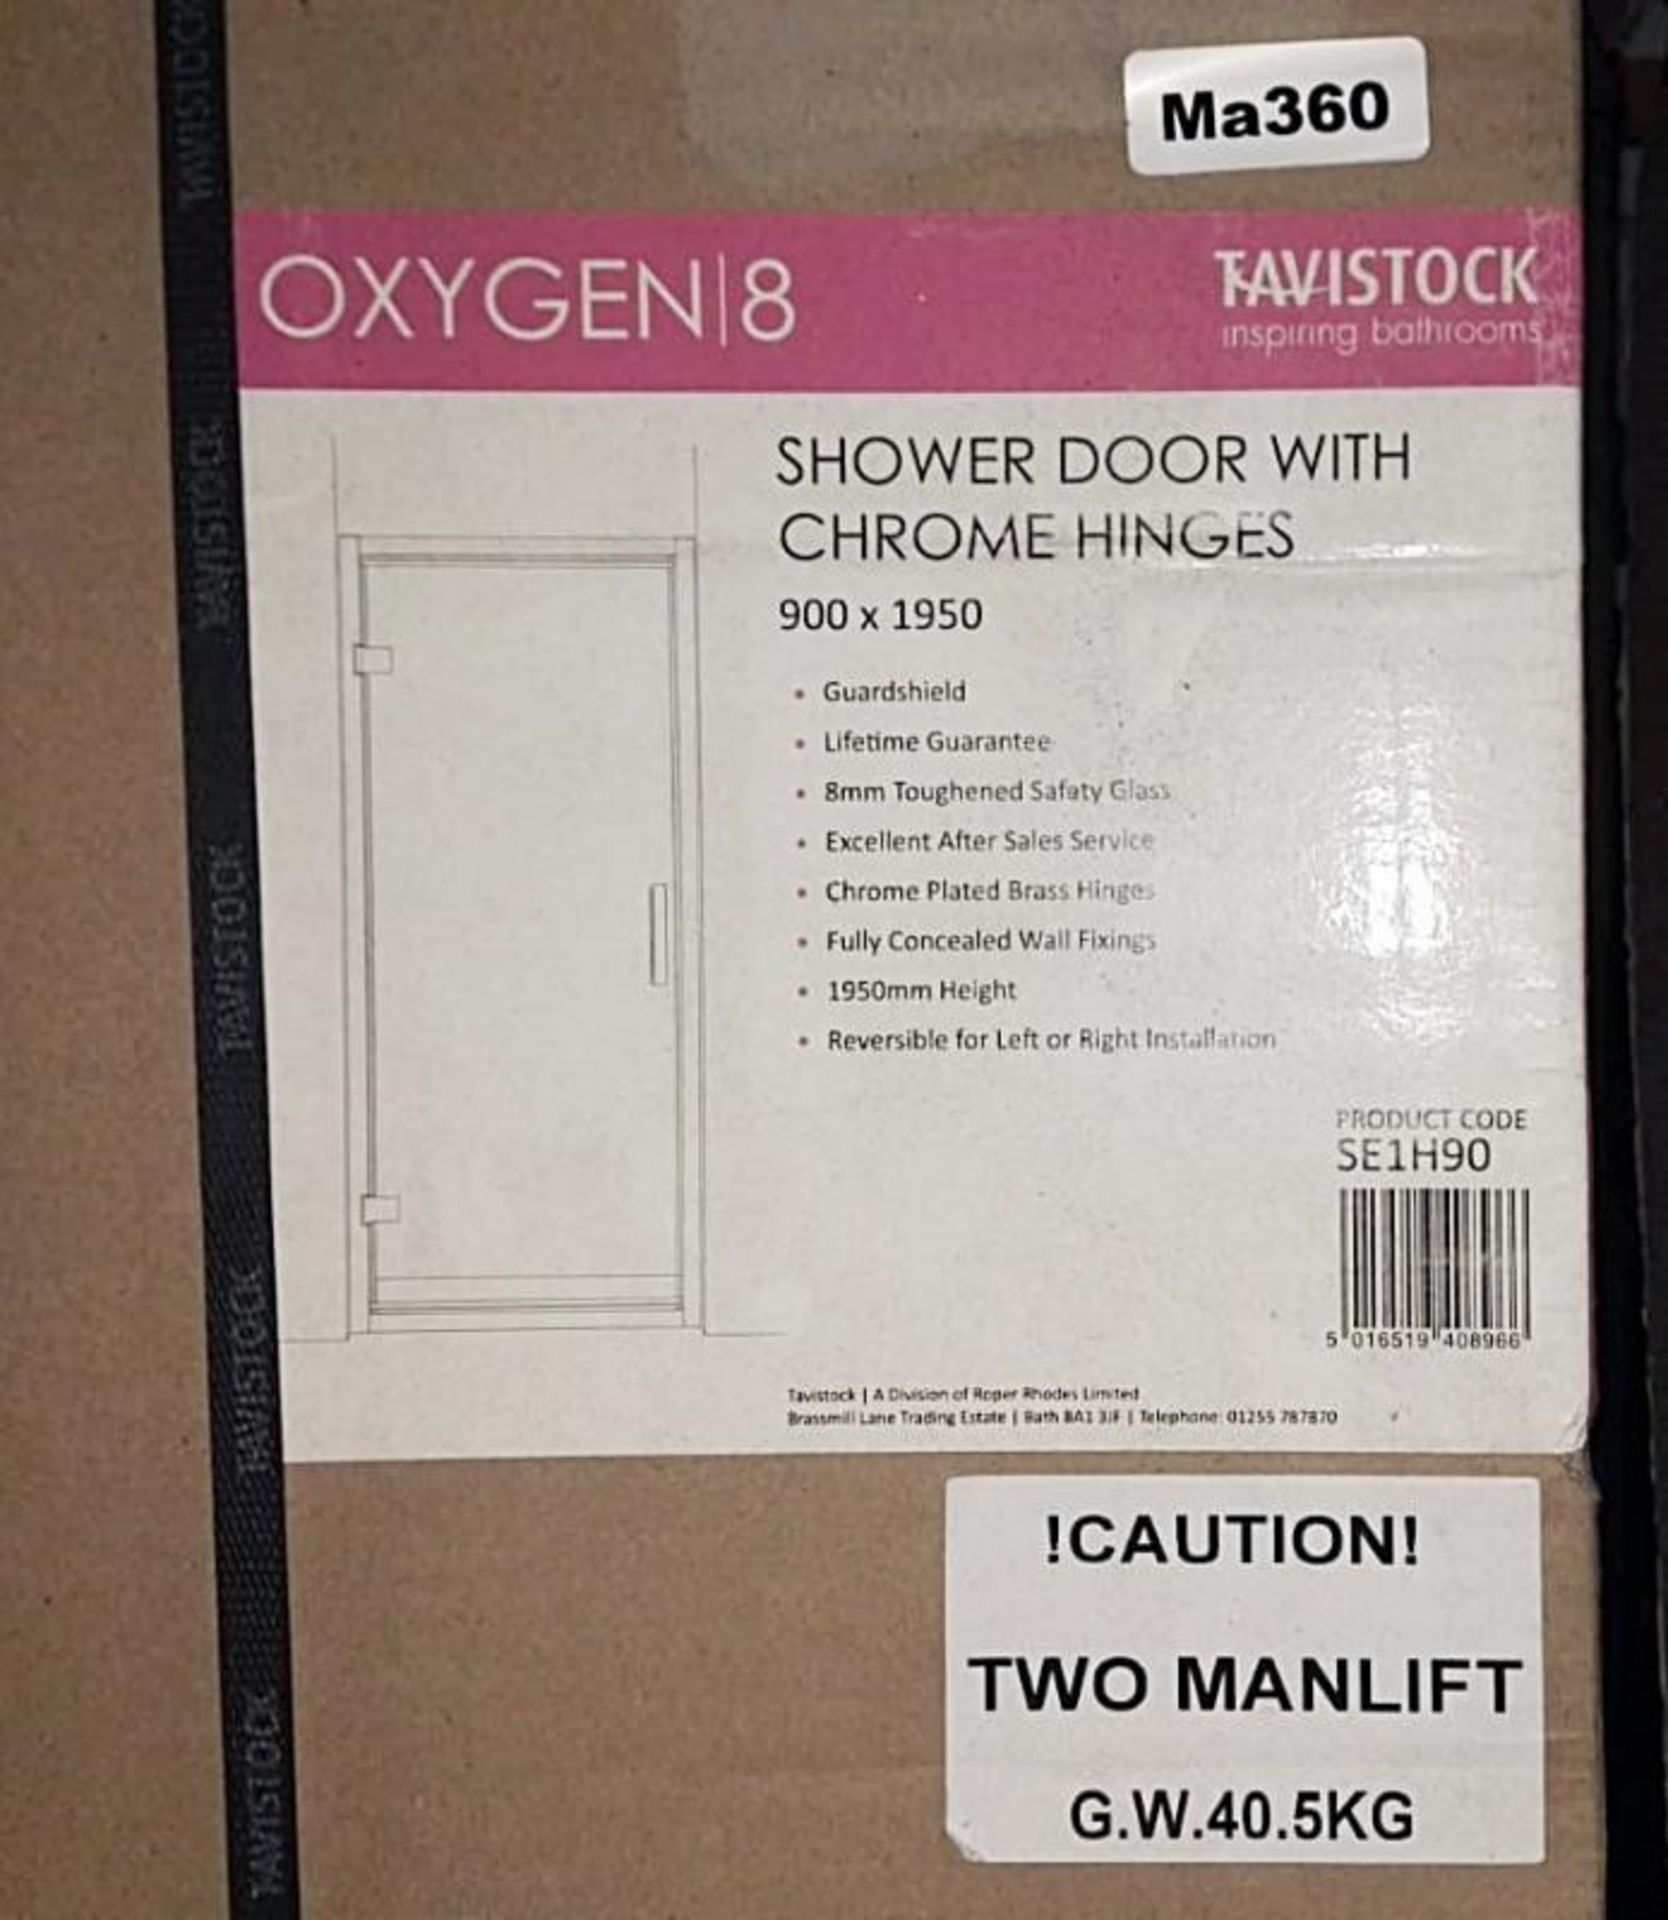 1 x Tavistock 'OXYGEN 8' Shower Door With Chrome Hidges - Dimensions: 900 x 1950mm - Ref: ma360 - Un - Image 2 of 2